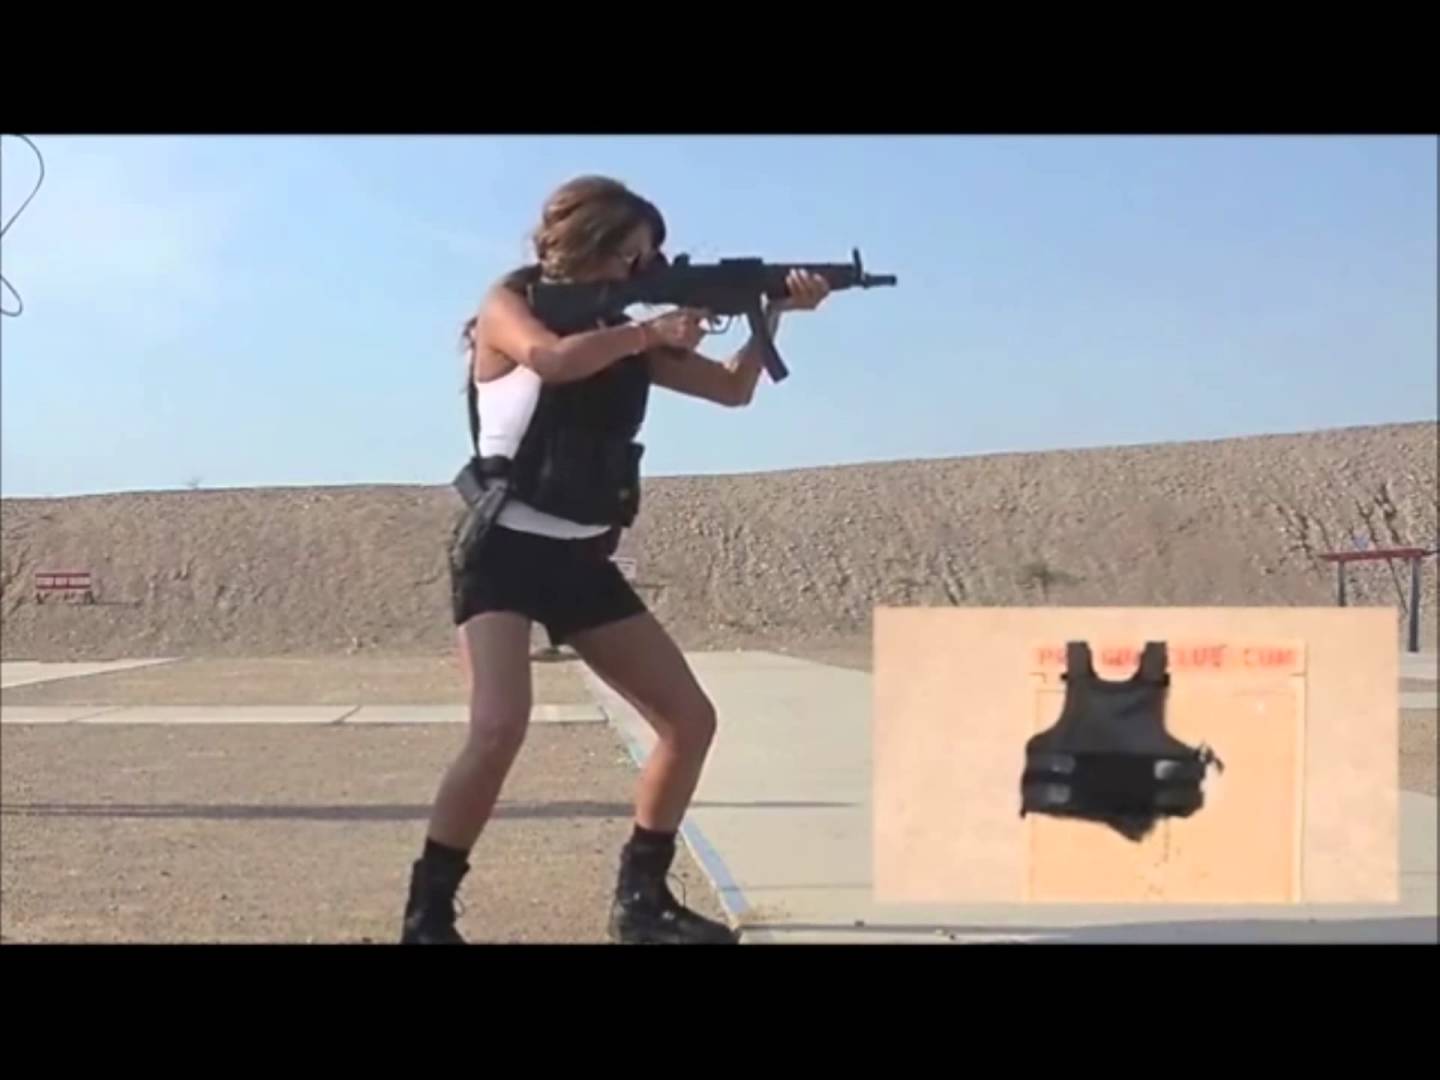 Skarr Armor Level IIIA Kevlar Vest vs MP5 9mm sub-machine gun